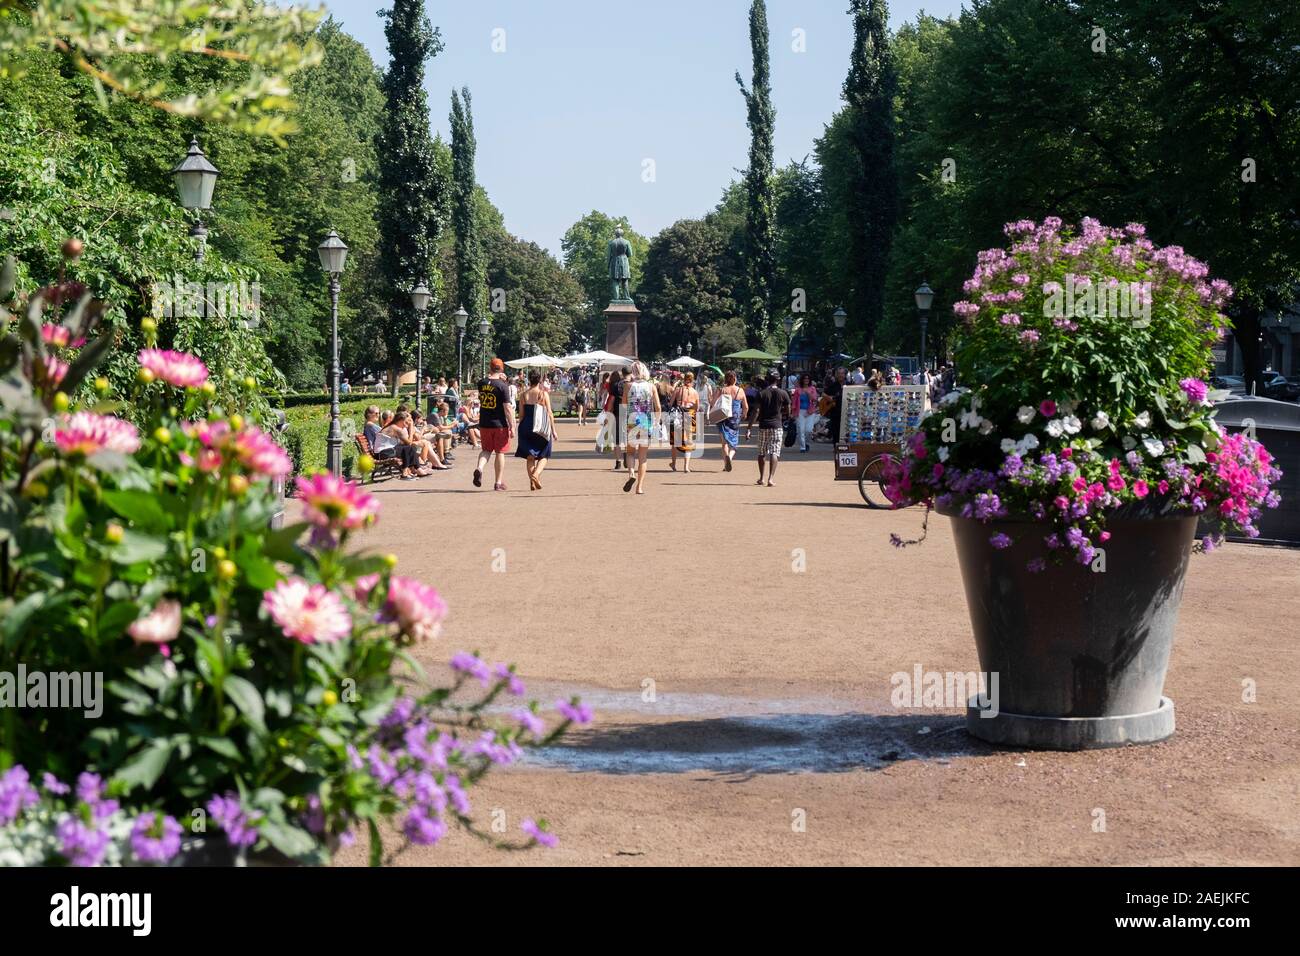 Les gens se promener dans le parc Esplanadi (Esplanadin puisto), Helsinki, Finlande, Scandinavie, l'Europe. Banque D'Images